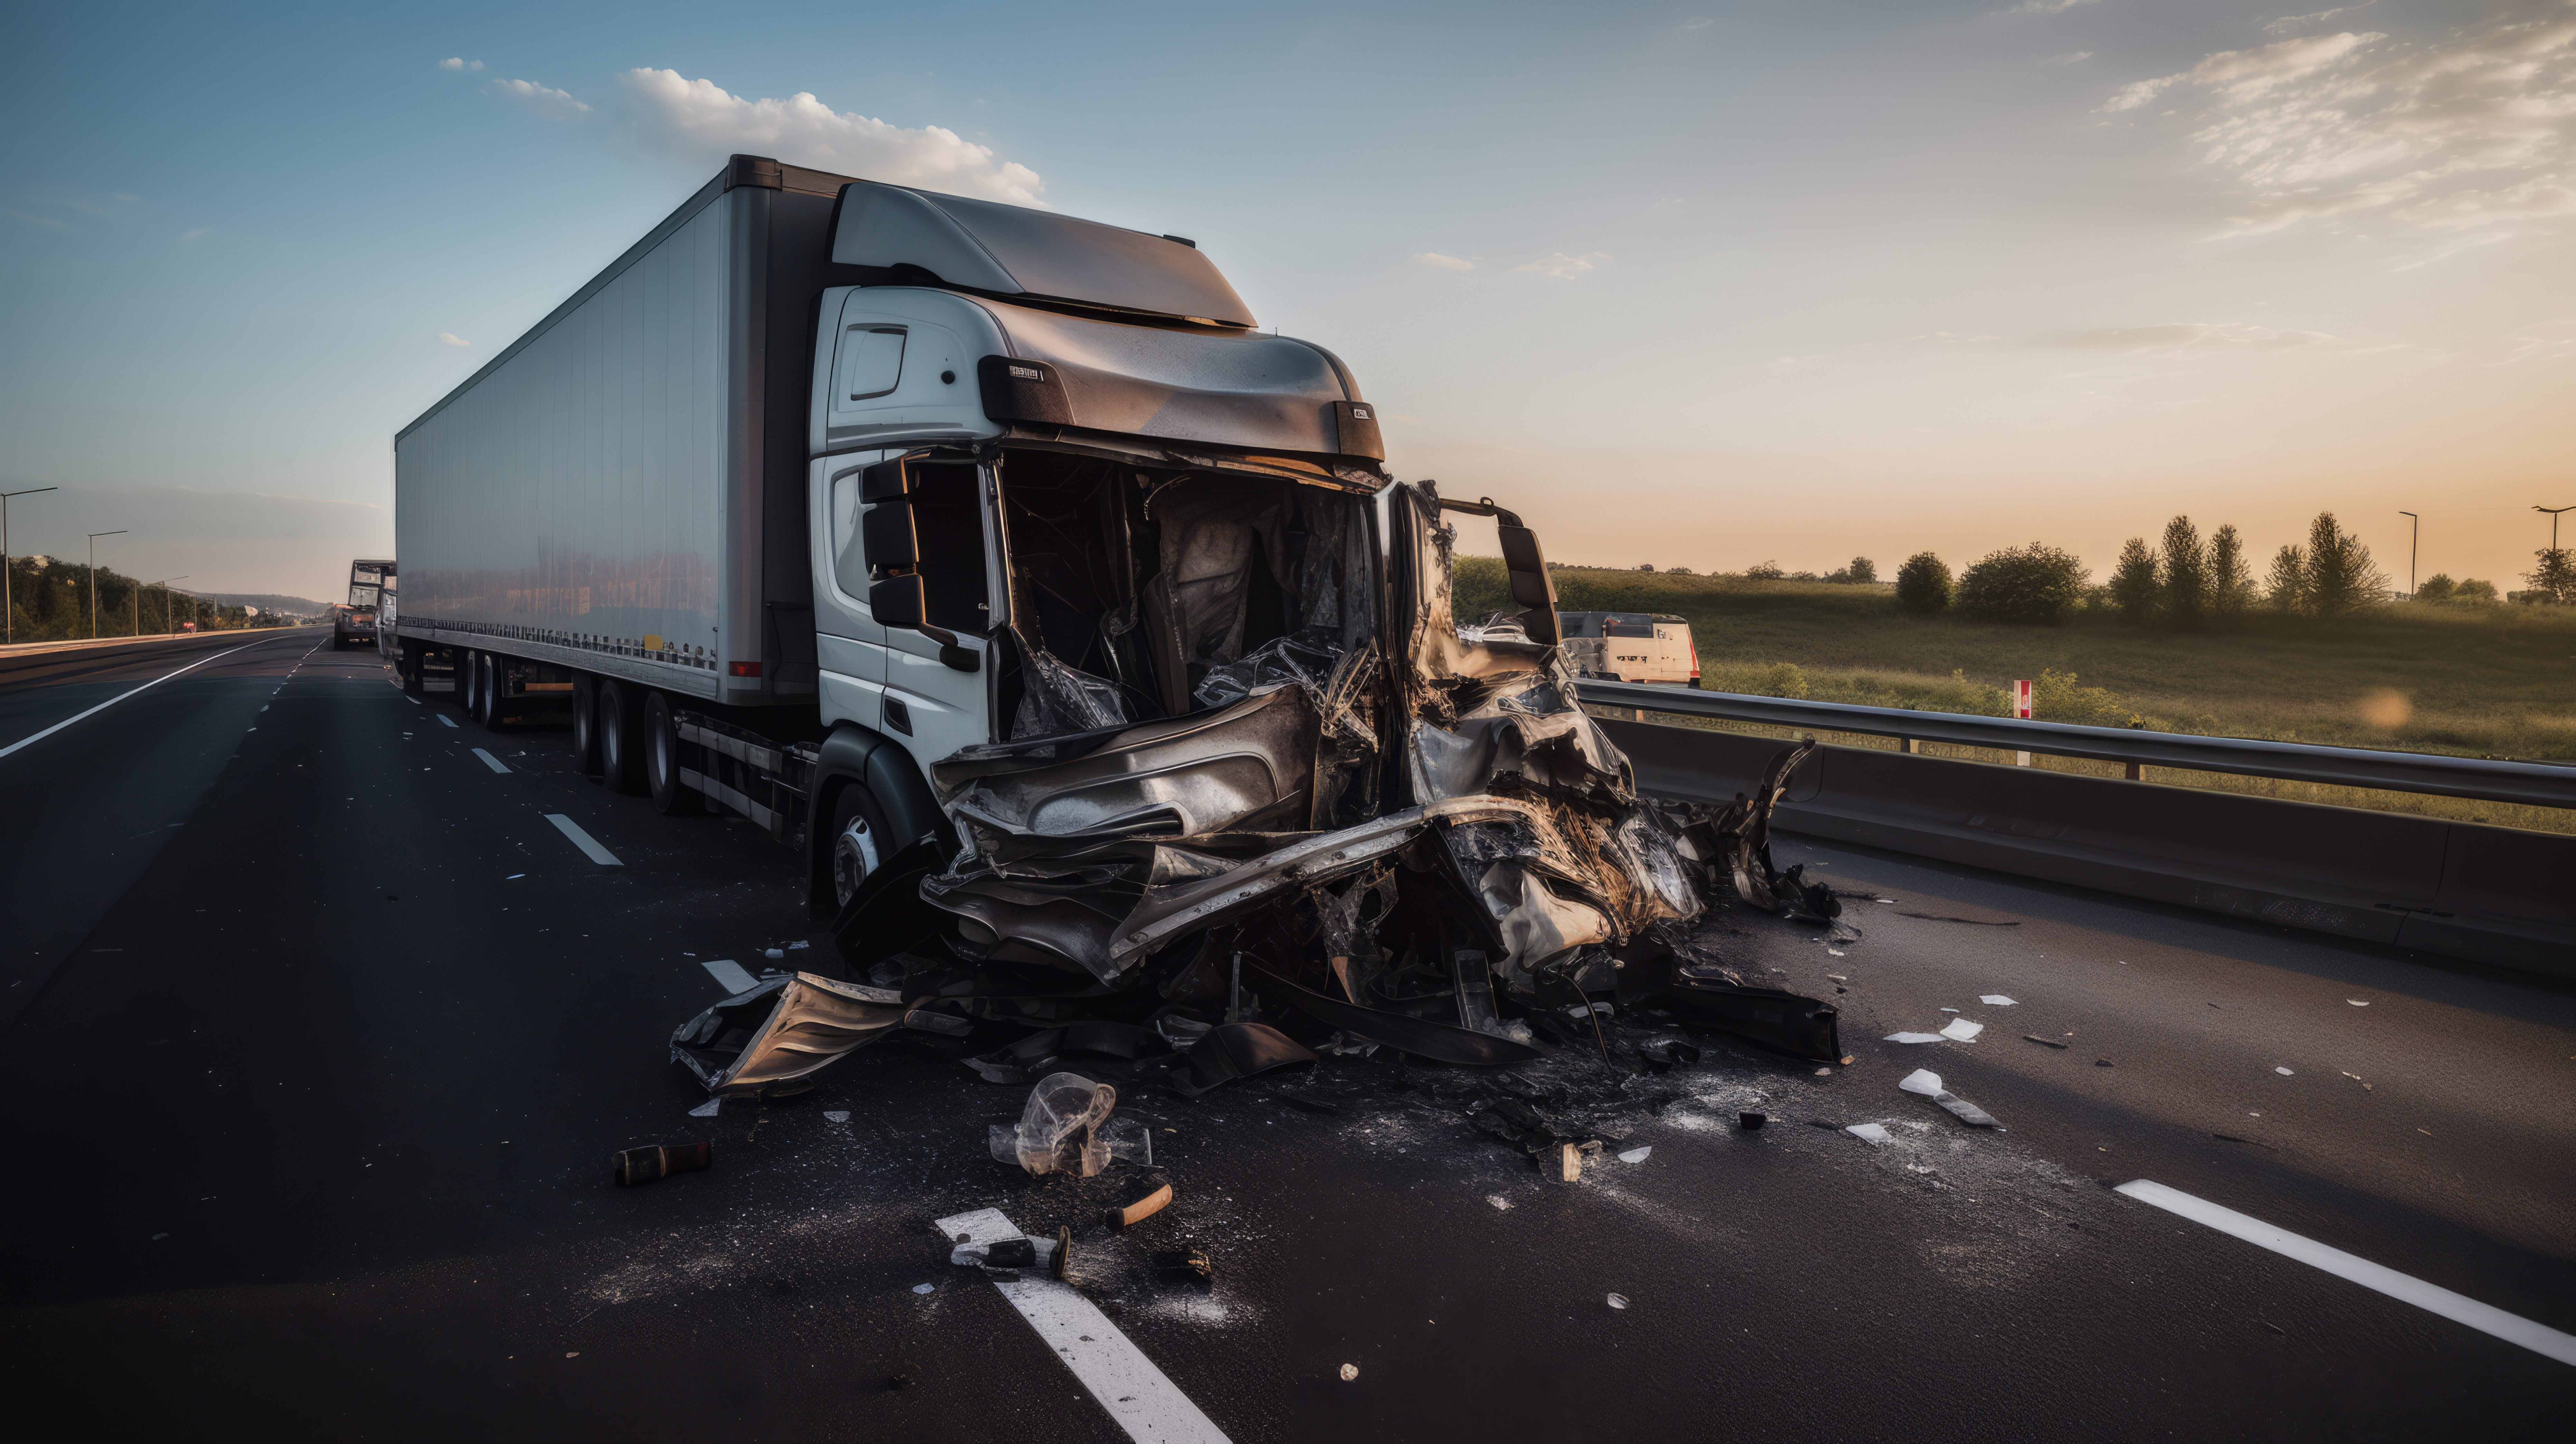 18-wheeler accident truck accident attorney huntsville al